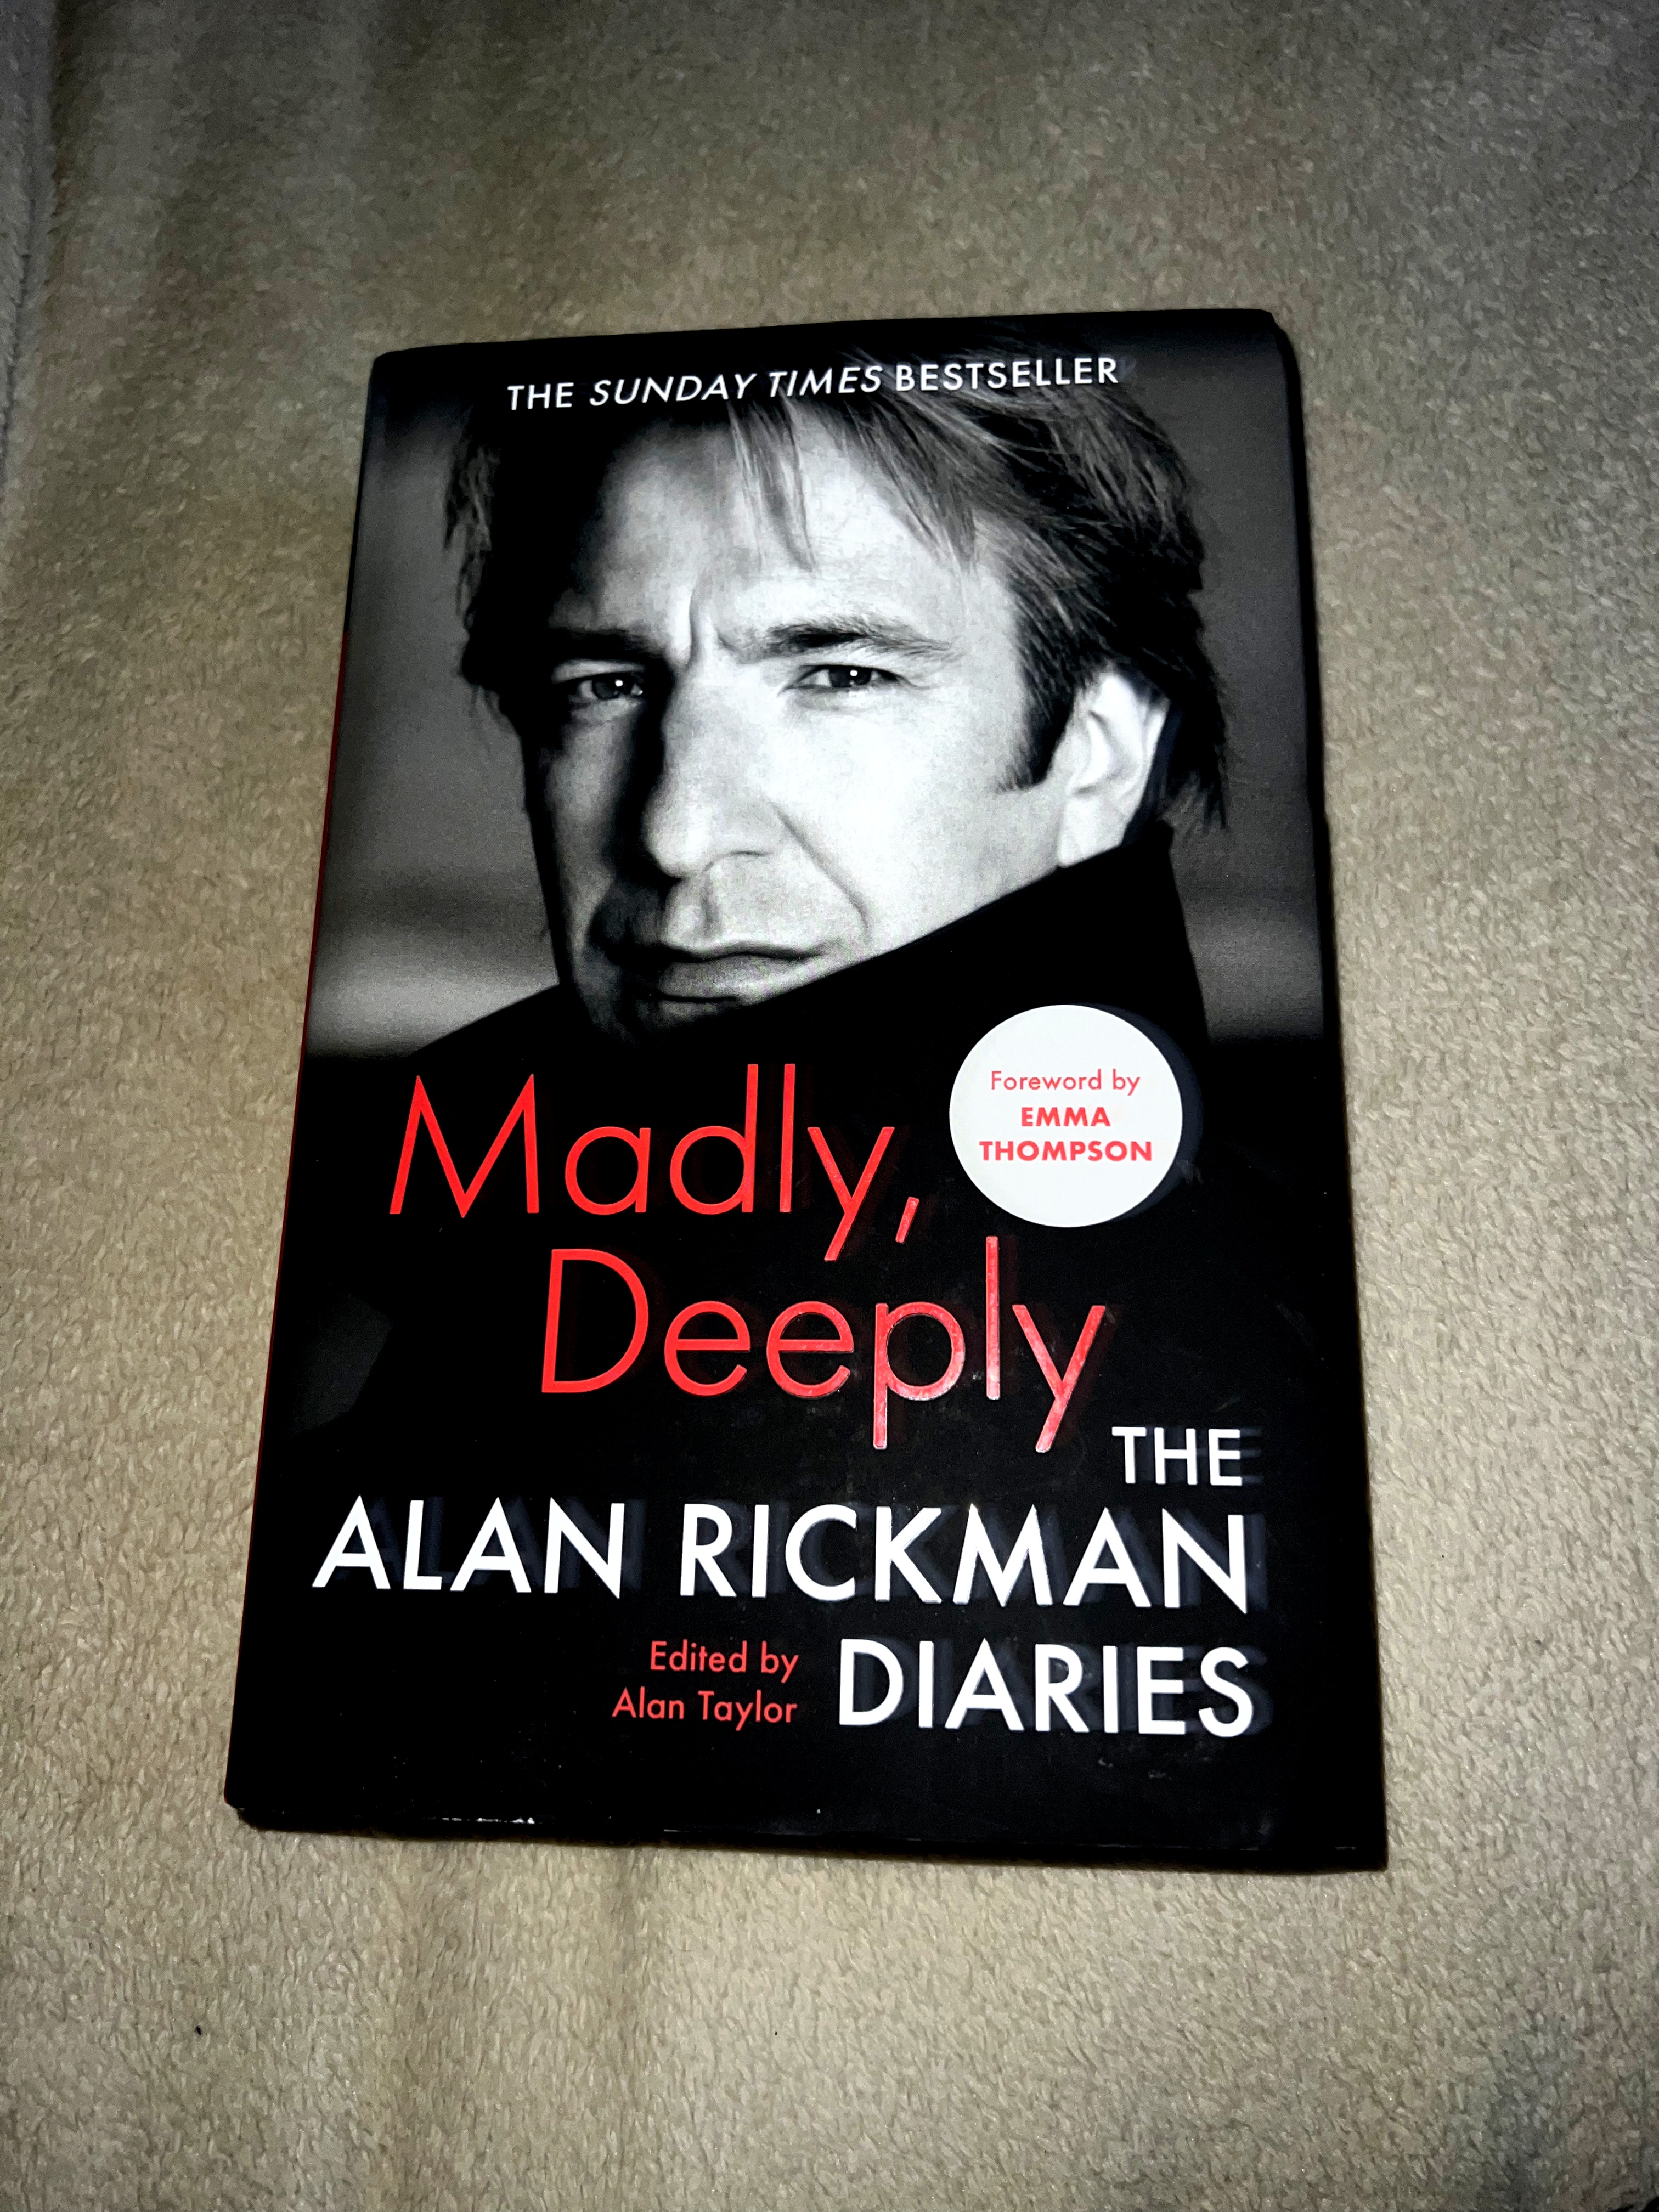 Alan Rickman: Biography, Actor, Die Hard, Harry Potter Series